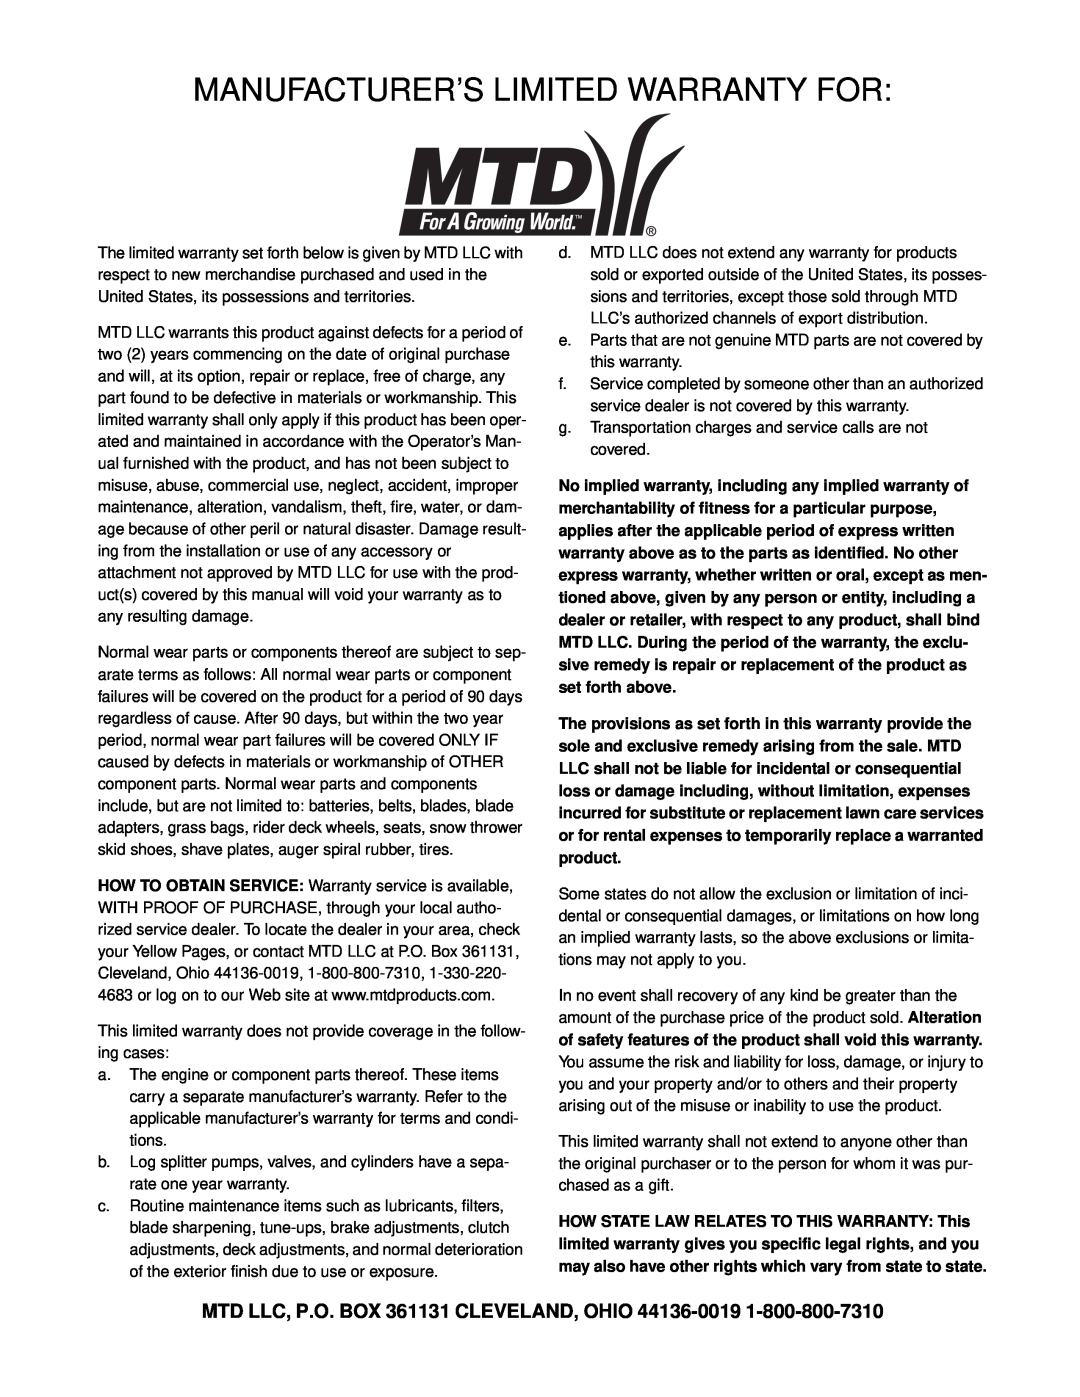 MTD 614E manual Manufacturer’S Limited Warranty For, MTD LLC, P.O. BOX 361131 CLEVELAND, OHIO 44136-0019 